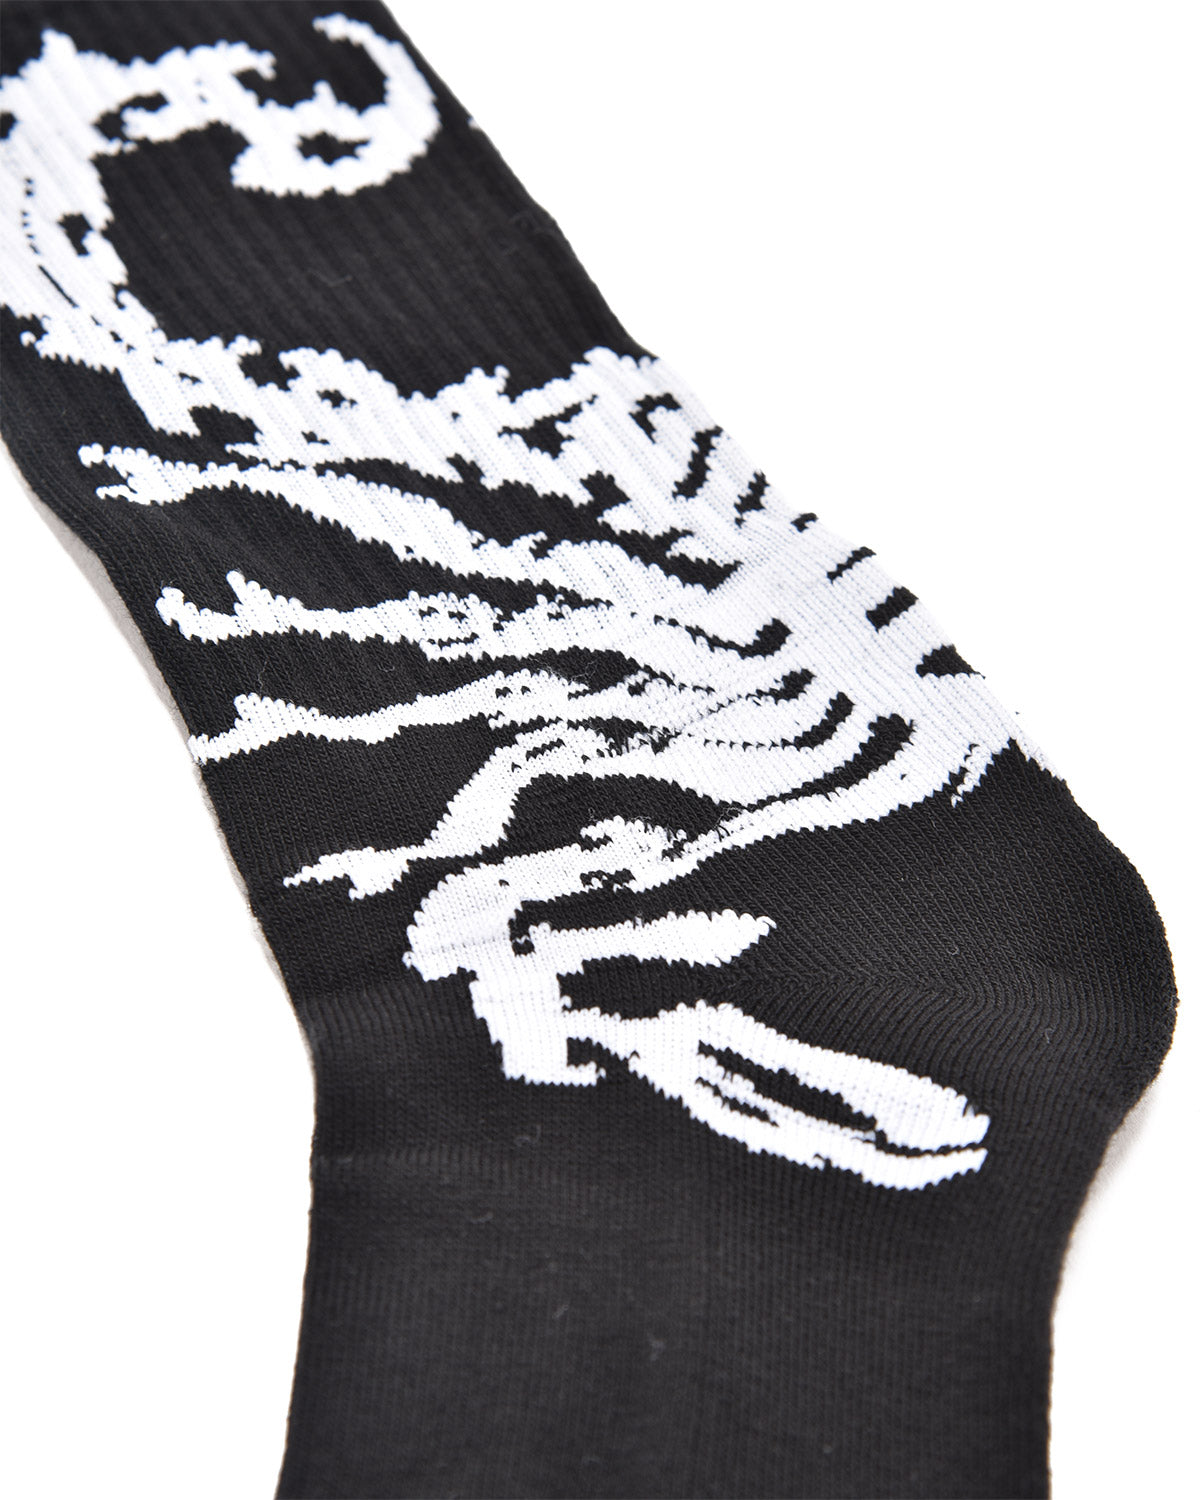 Black Scorpion Bay Socks With White Scorpion Embroidery